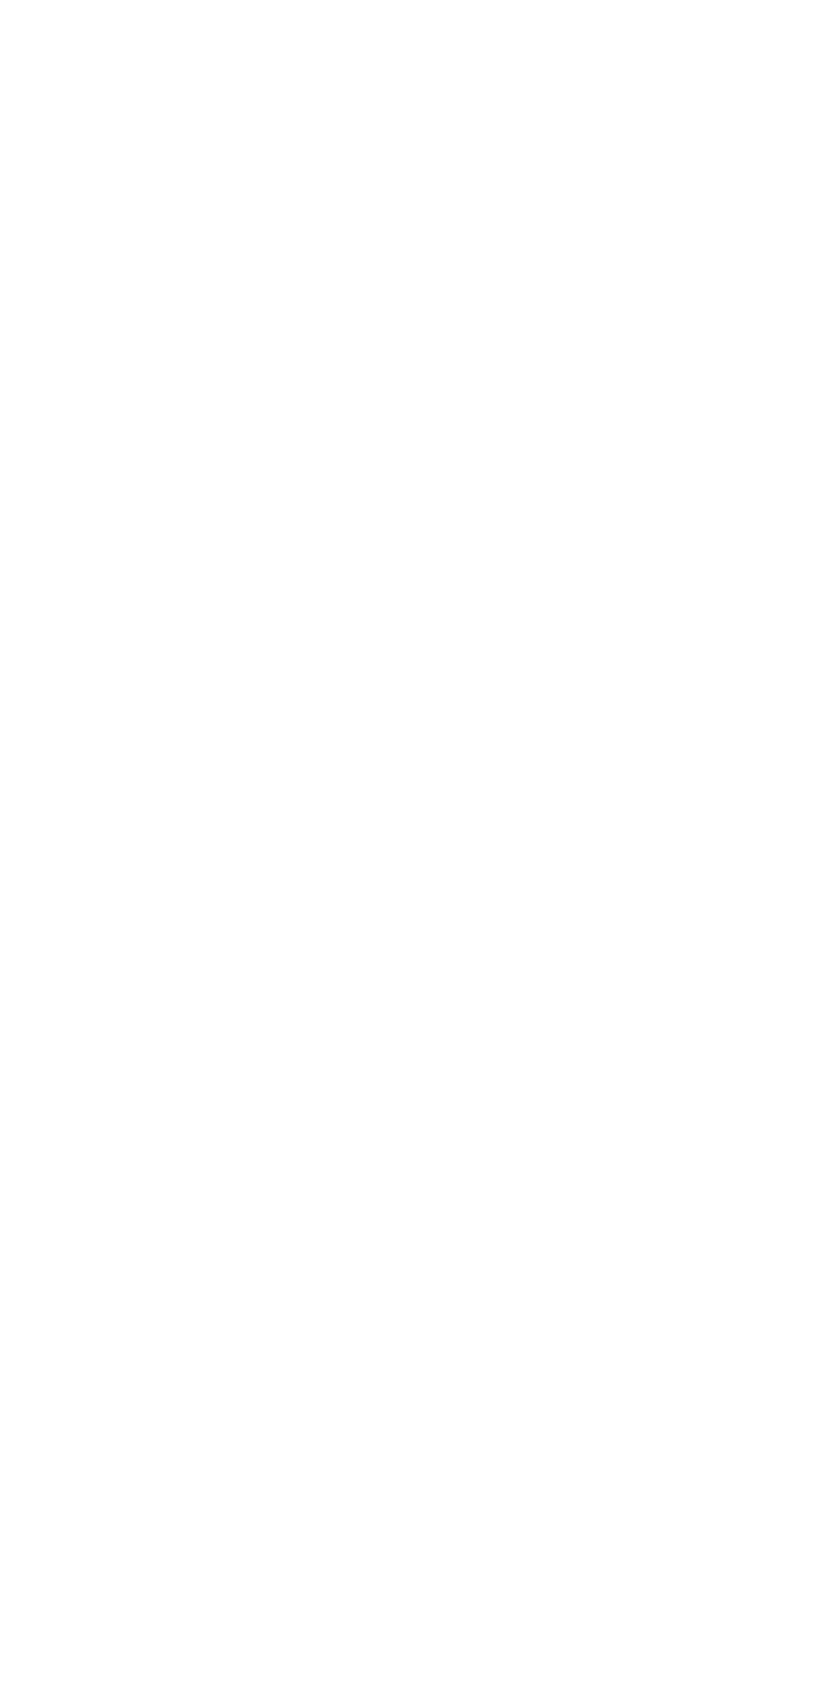 Golf Bleu de Chanel Dolce & Gabbana AP, Rolex y Breitling Porsche Cayenne Gin and tonic (alcoholico) y awa (no alcoho   